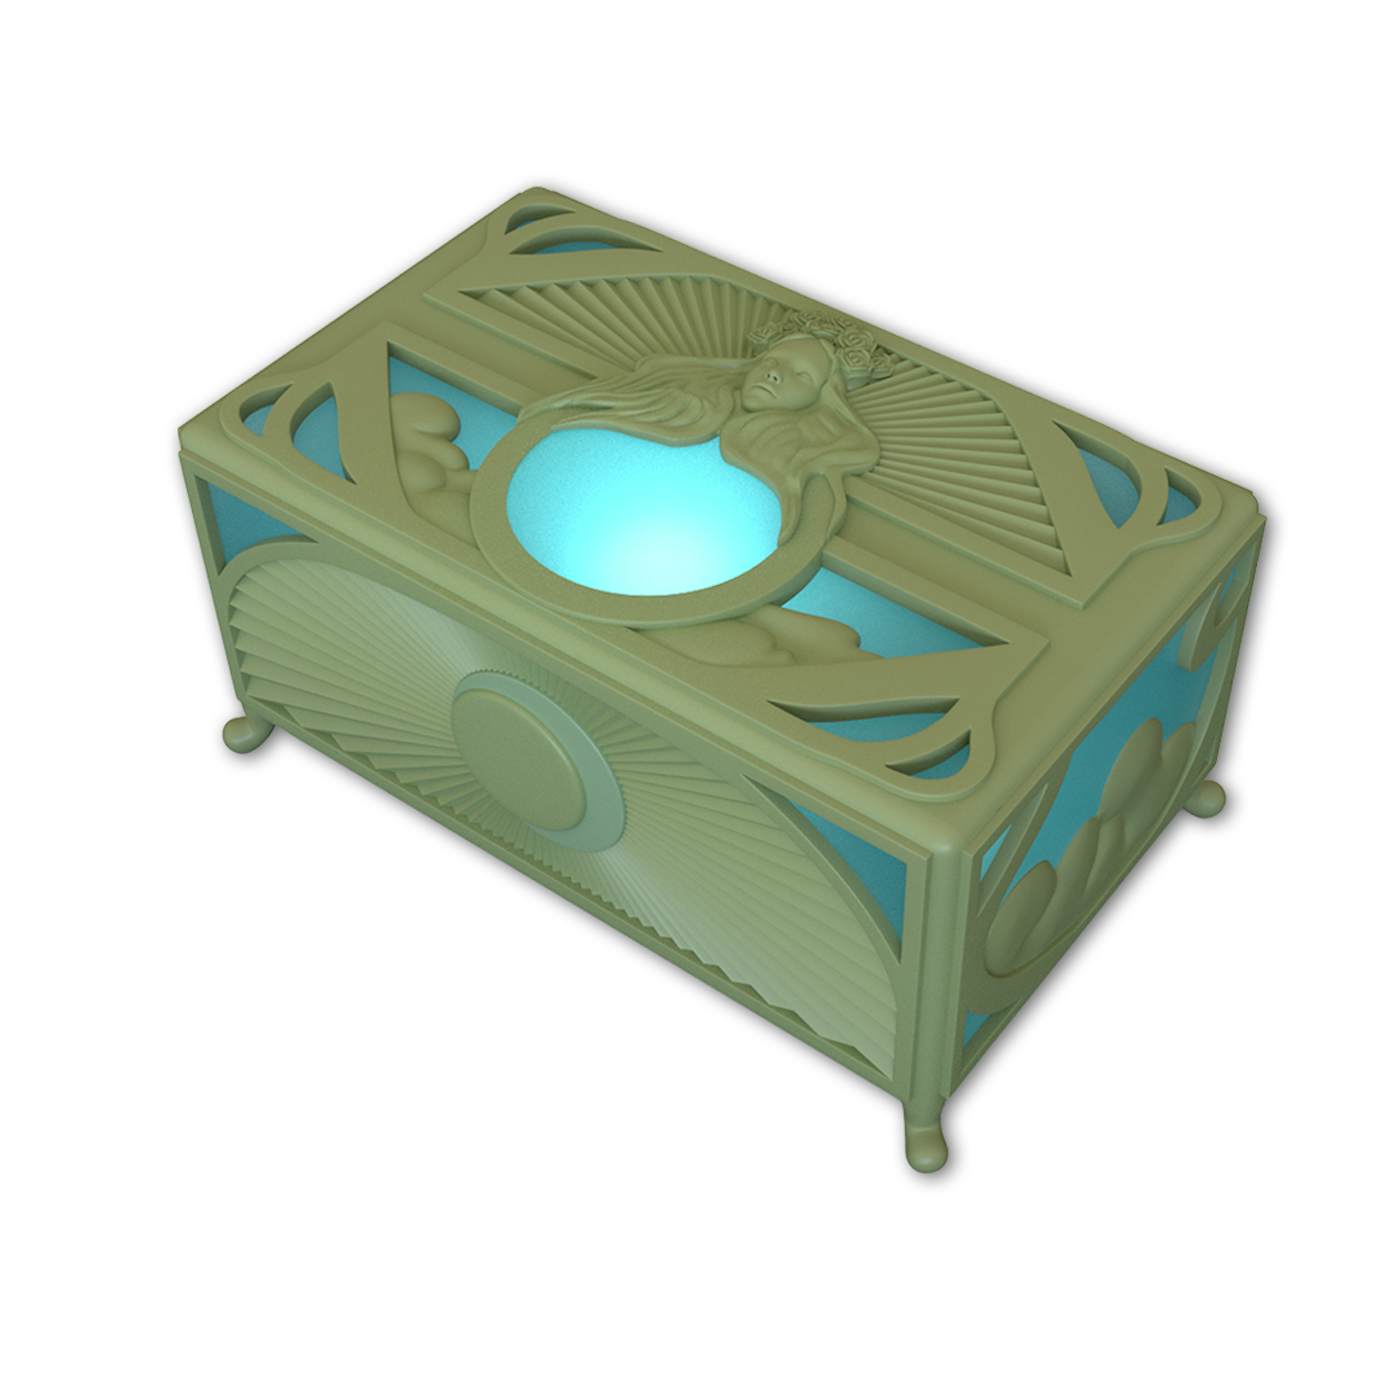 Spiritbox - Functional "Spiritbox" Collectible